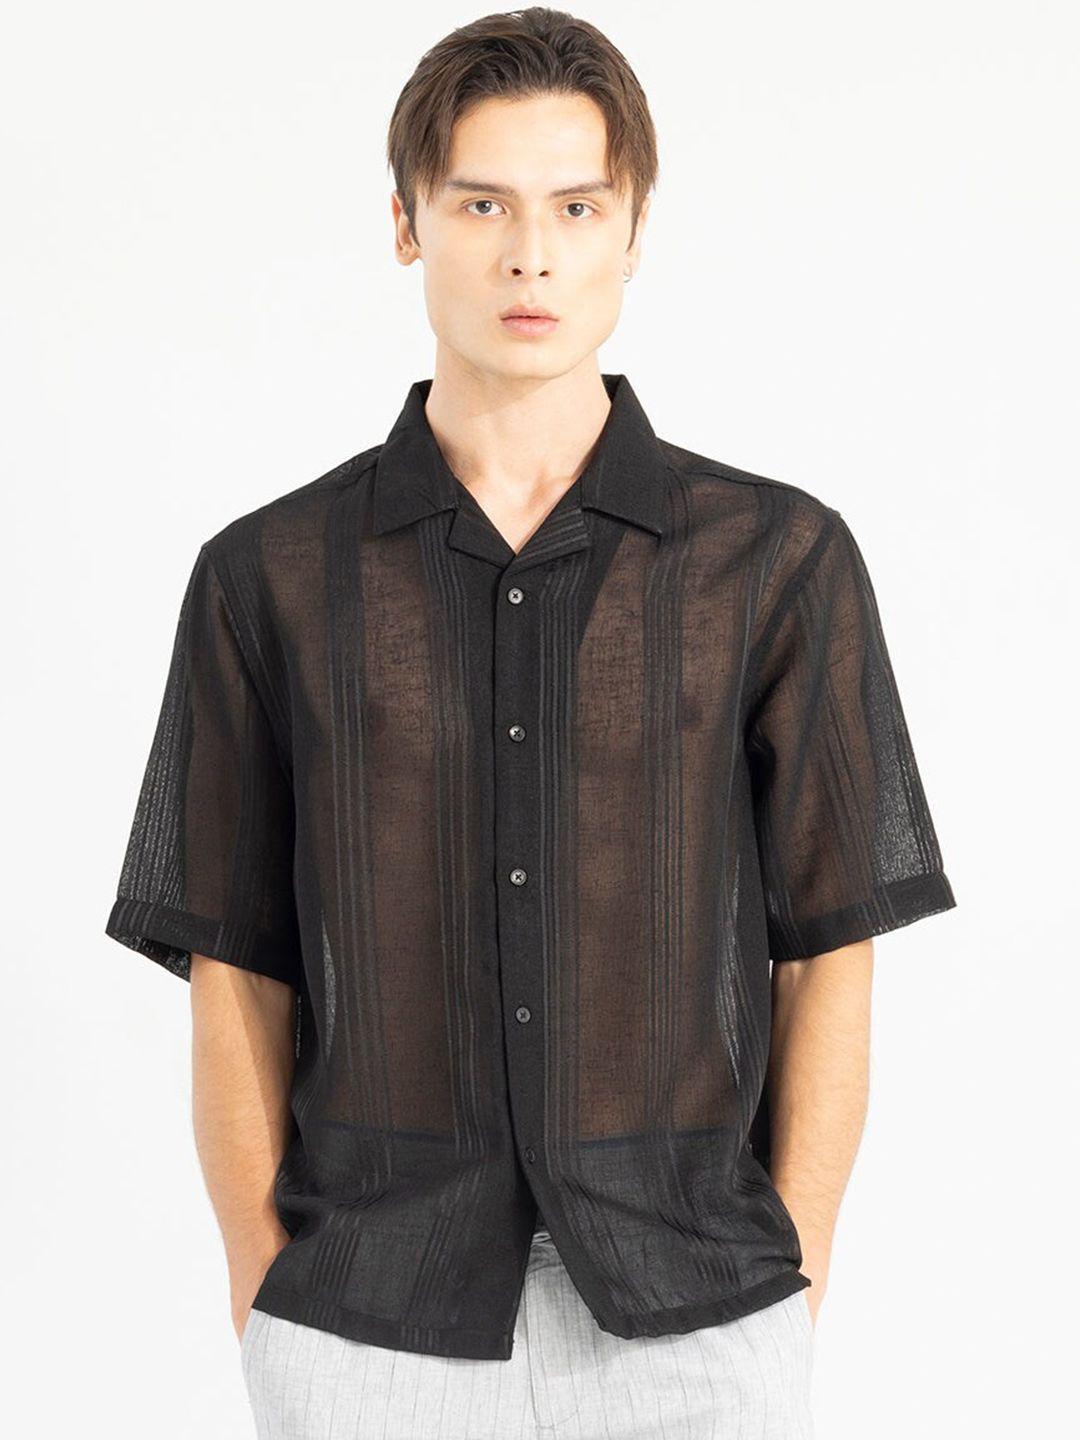 snitch classic oversized vertical striped semi sheer pure cotton casual shirt